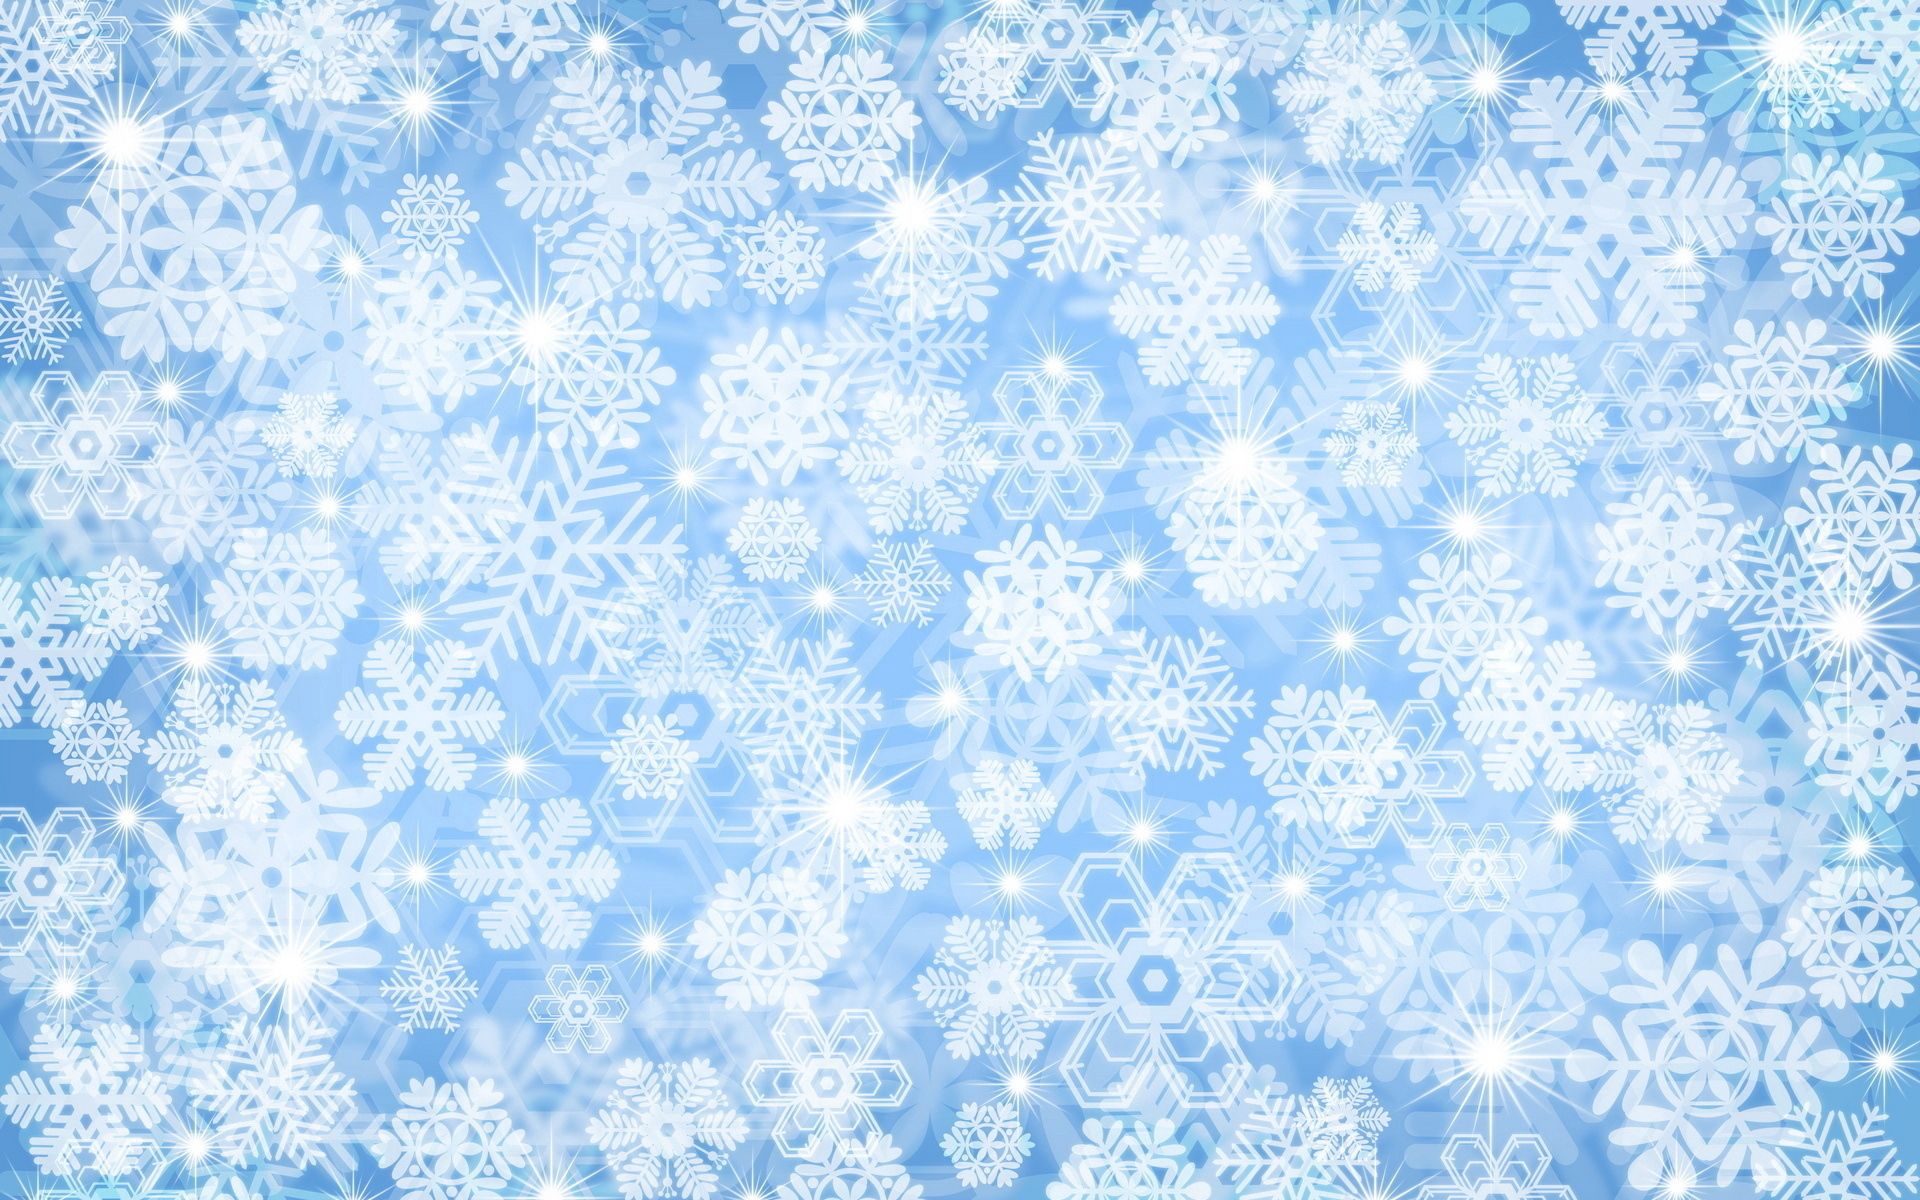  Snowflakes Cellphone FHD pic